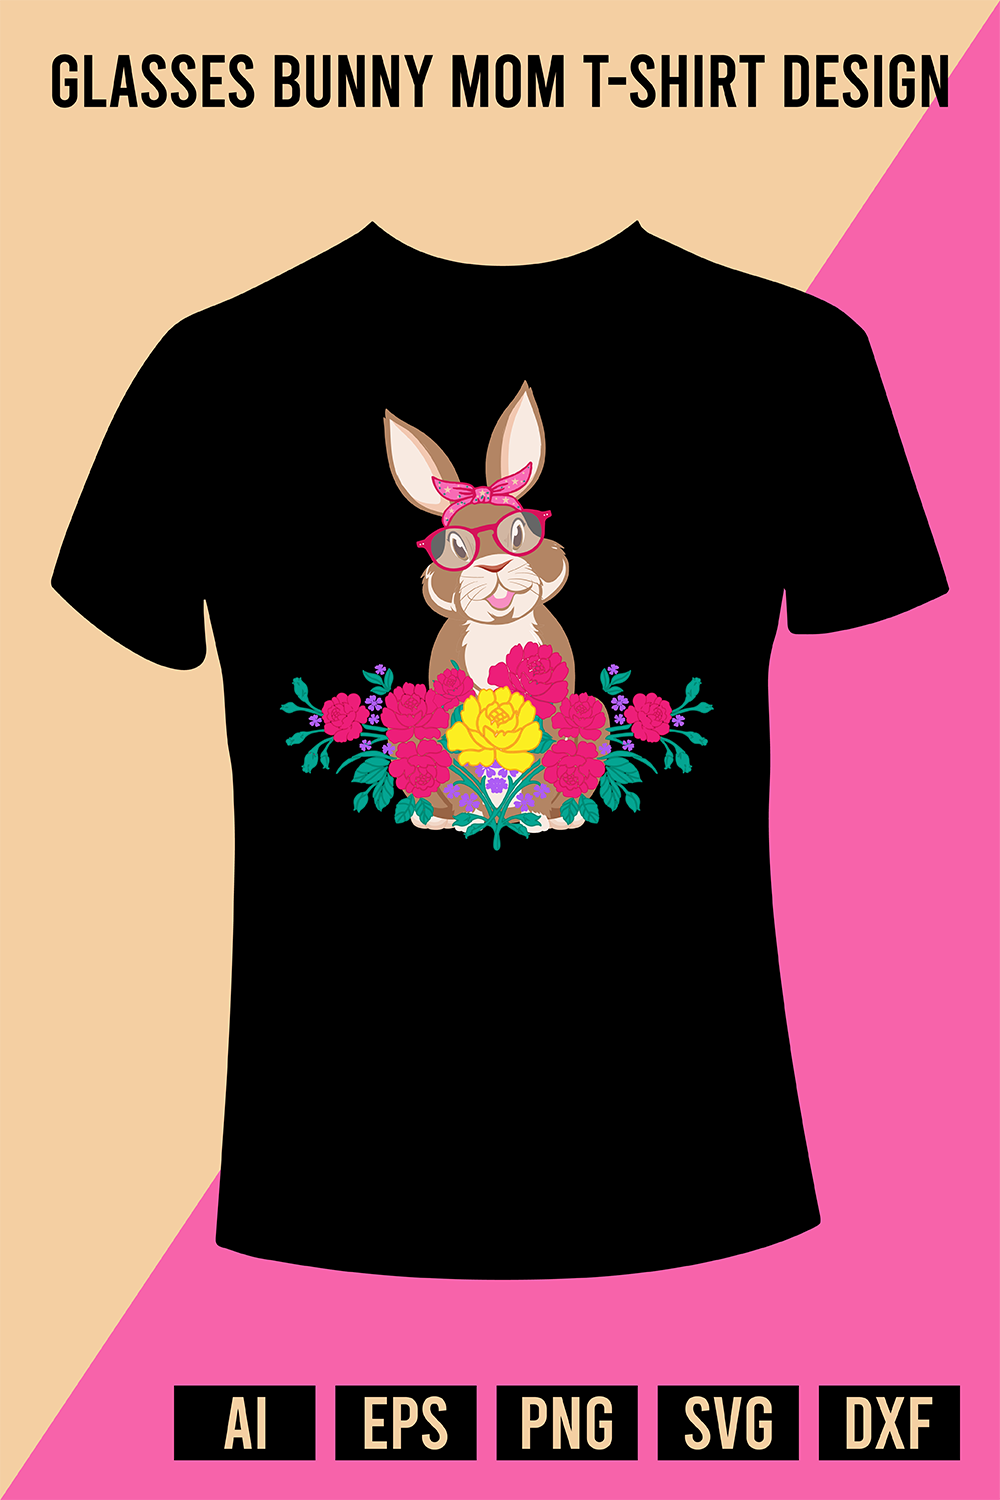 Glasses Bunny Mom T-Shirt Design pinterest preview image.